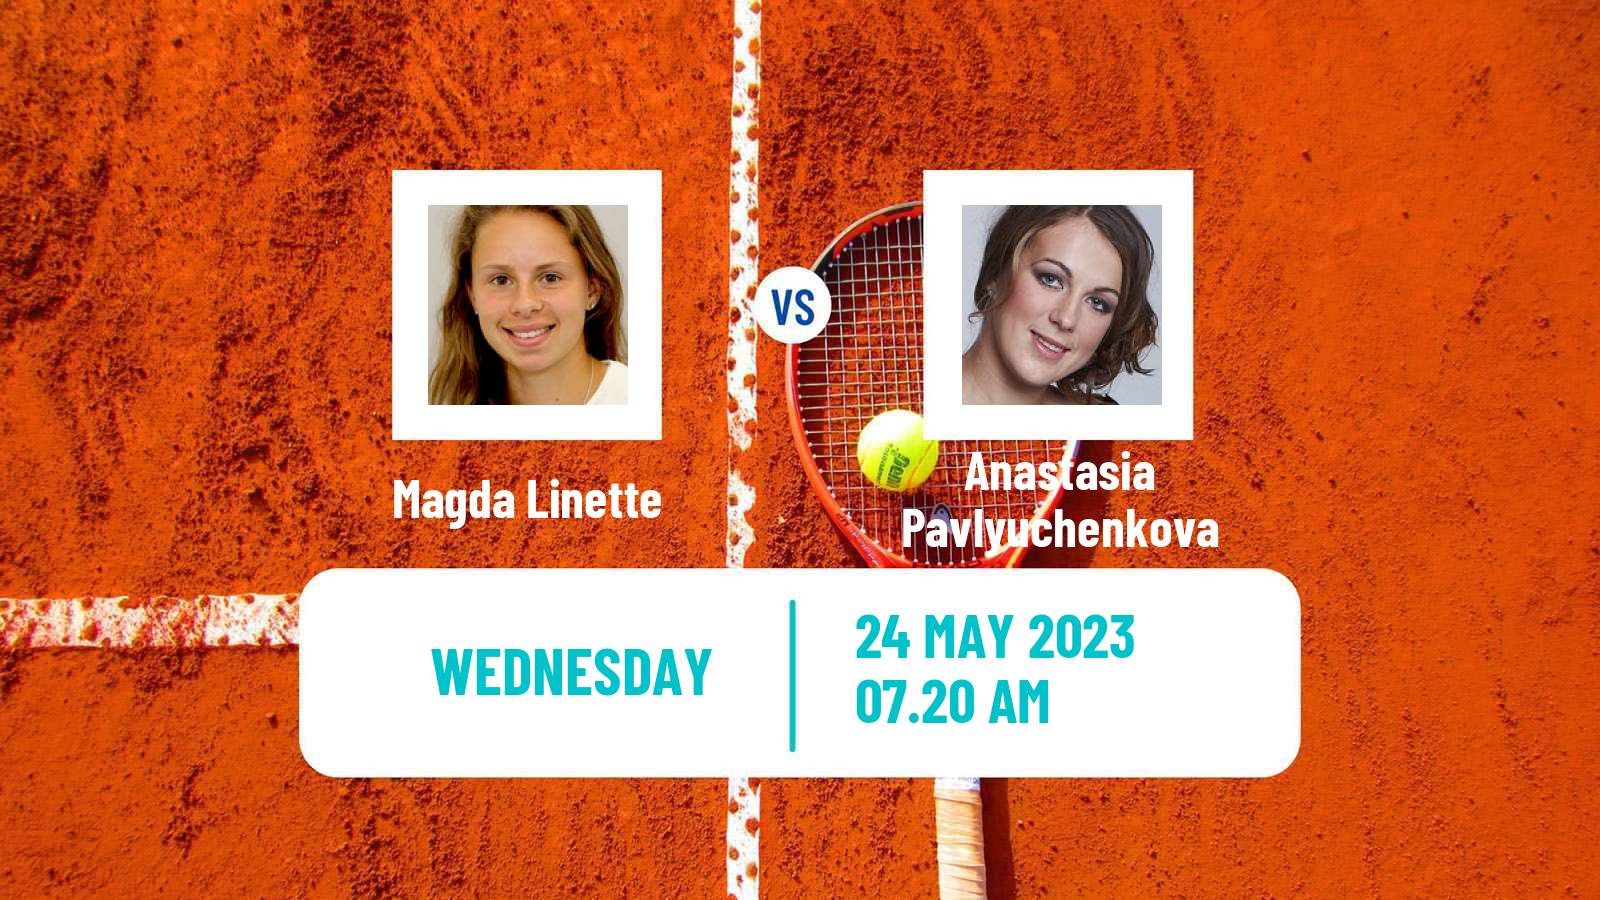 Tennis WTA Strasbourg Magda Linette - Anastasia Pavlyuchenkova